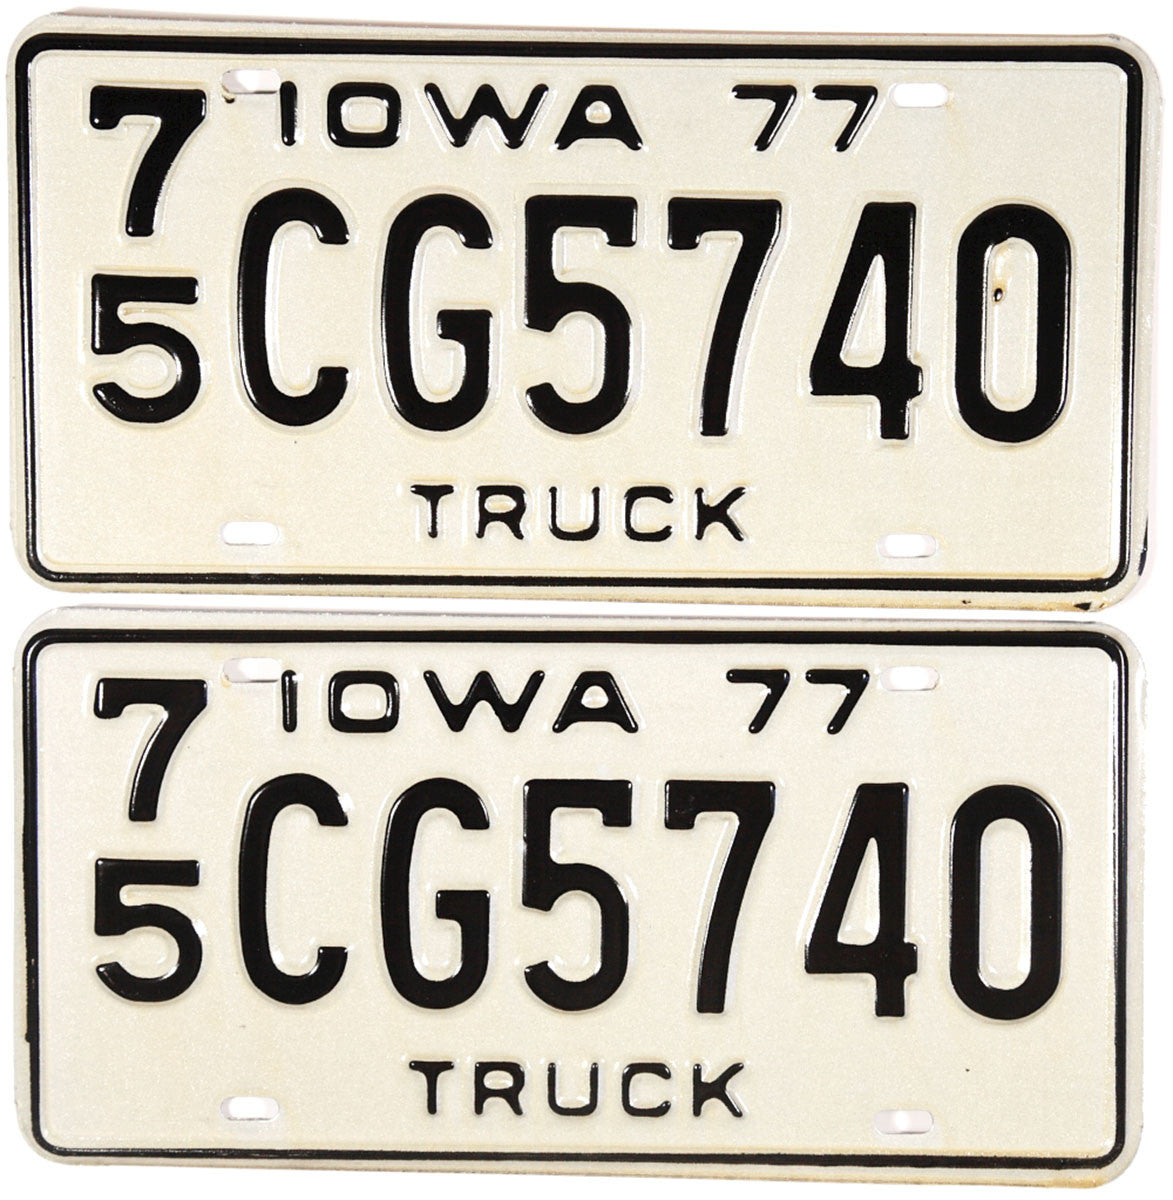 1977 Iowa Truck License Plates